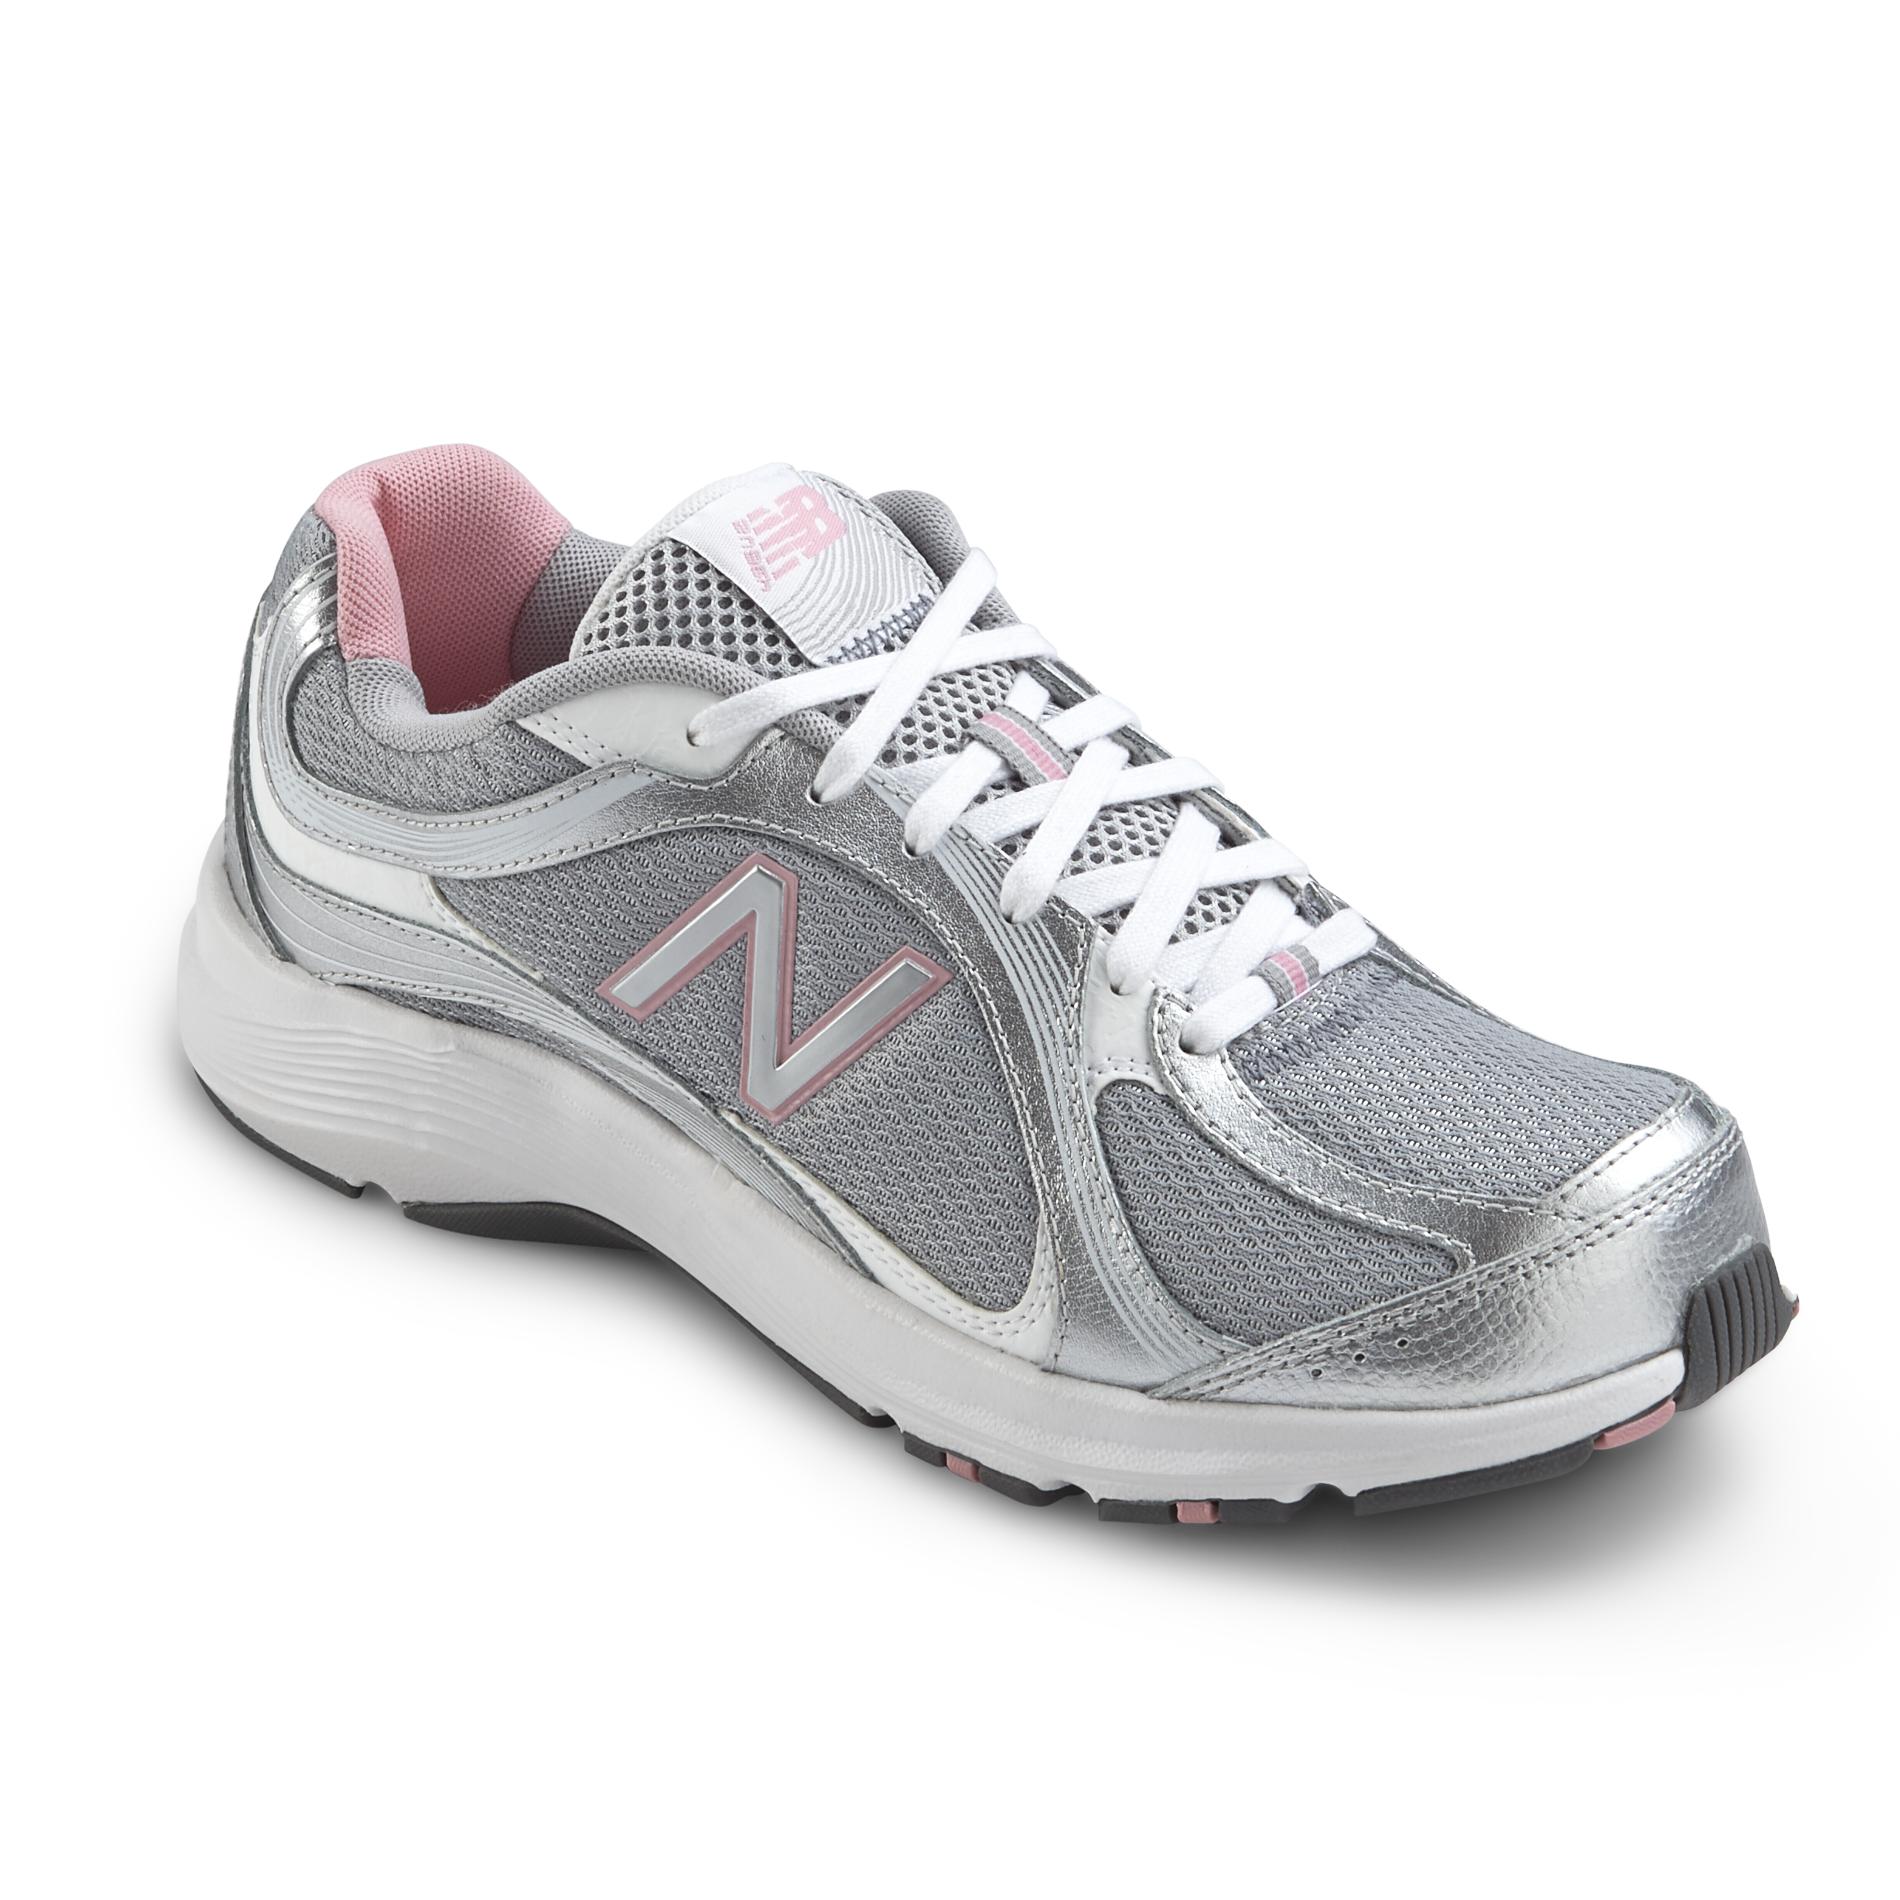 New Balance Women's 496v2 Grey/Pink Athletic Shoe - Wide Width | Shop ...